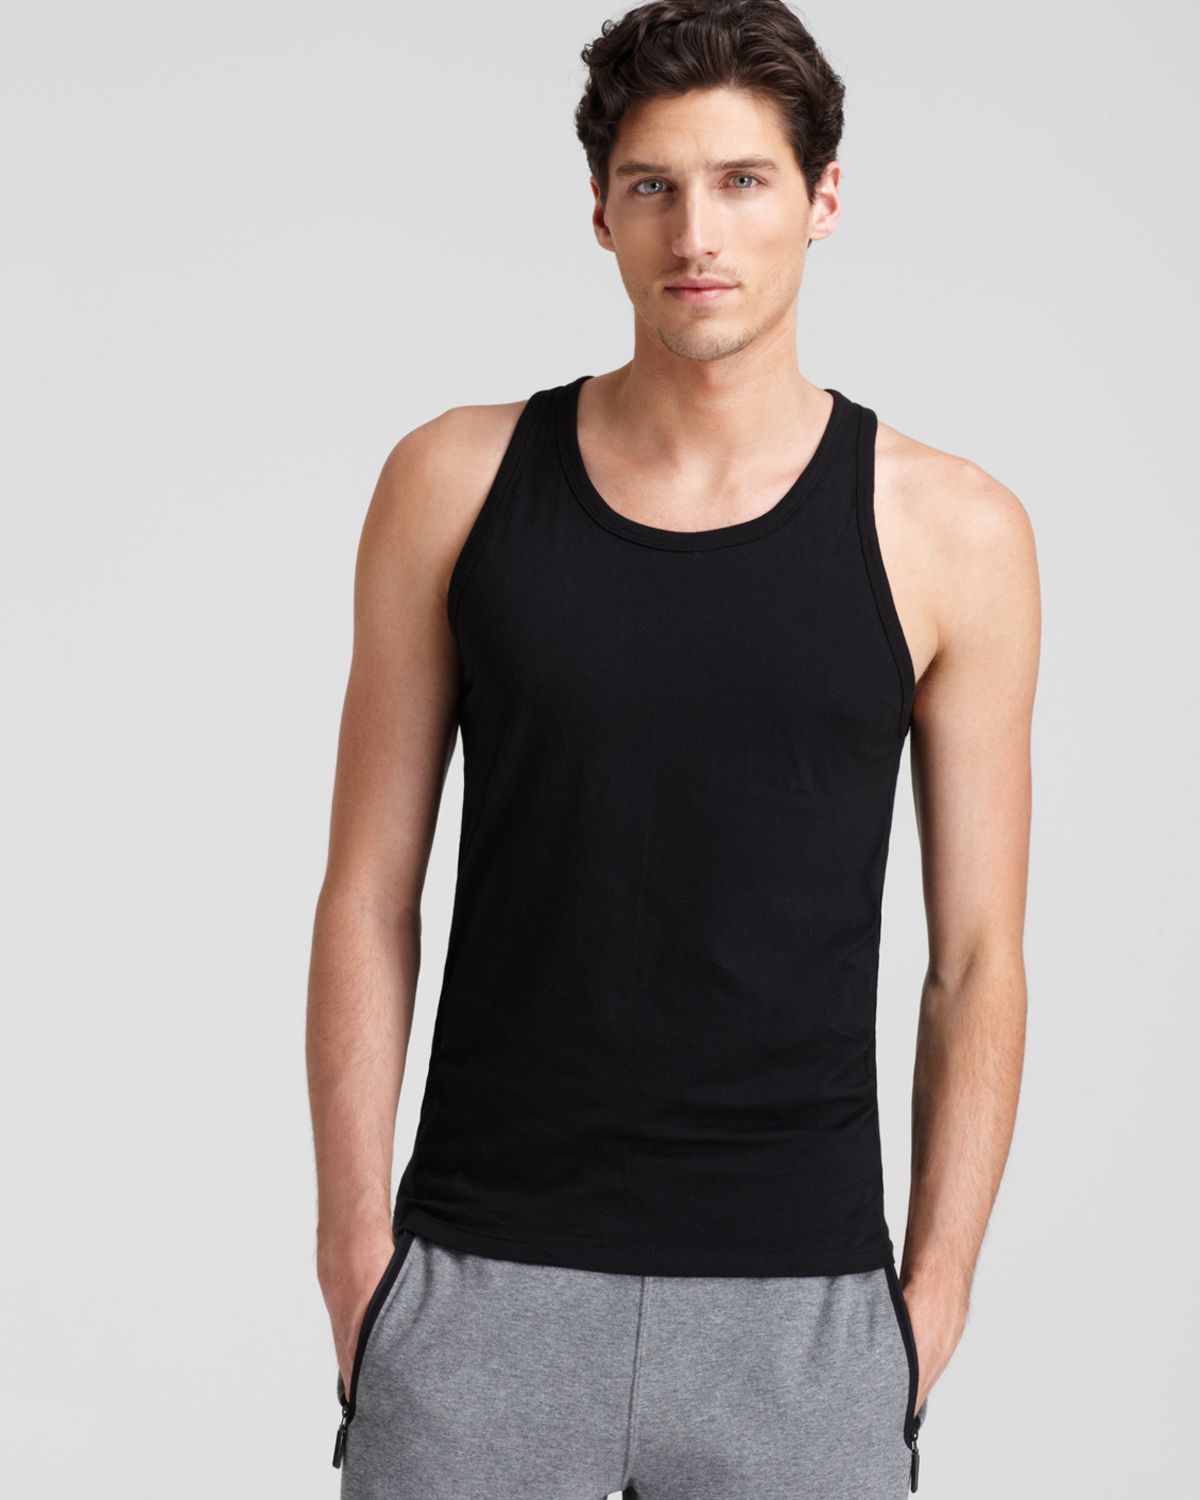 Lyst - Calvin Klein Slim Fit Body Tank in Black for Men